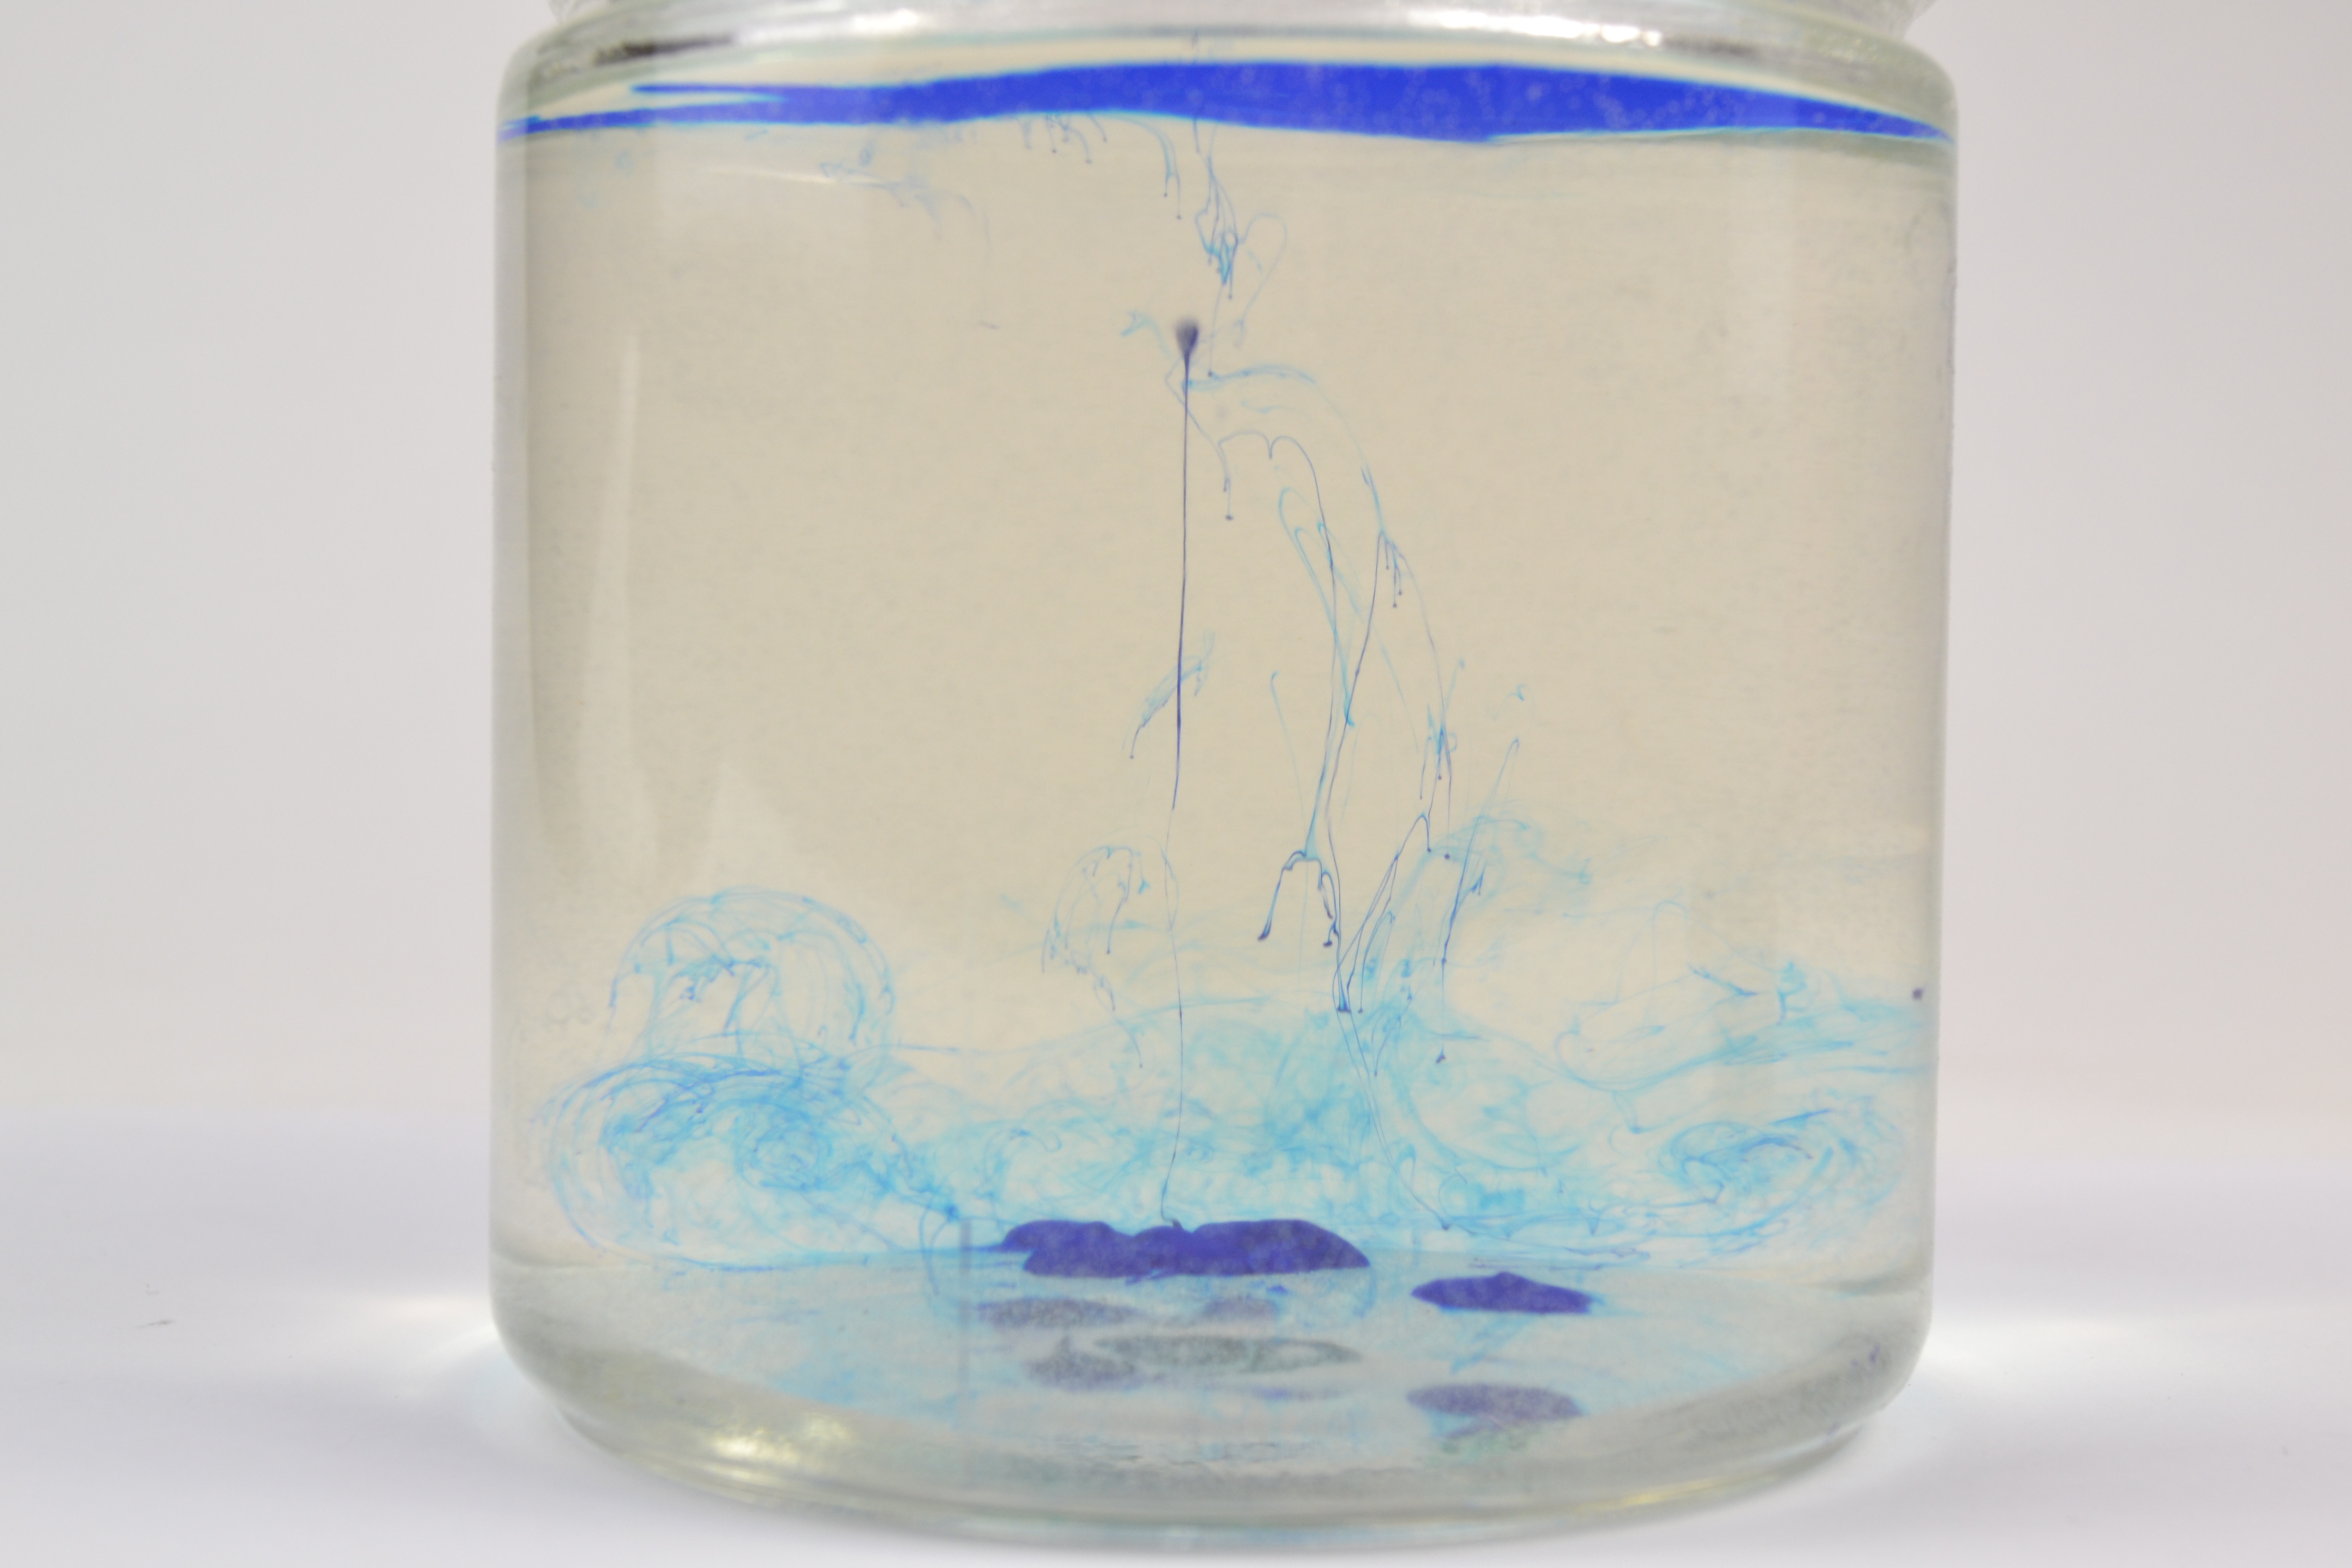 aqua-dispersions se mélangeant dans l'eau 1